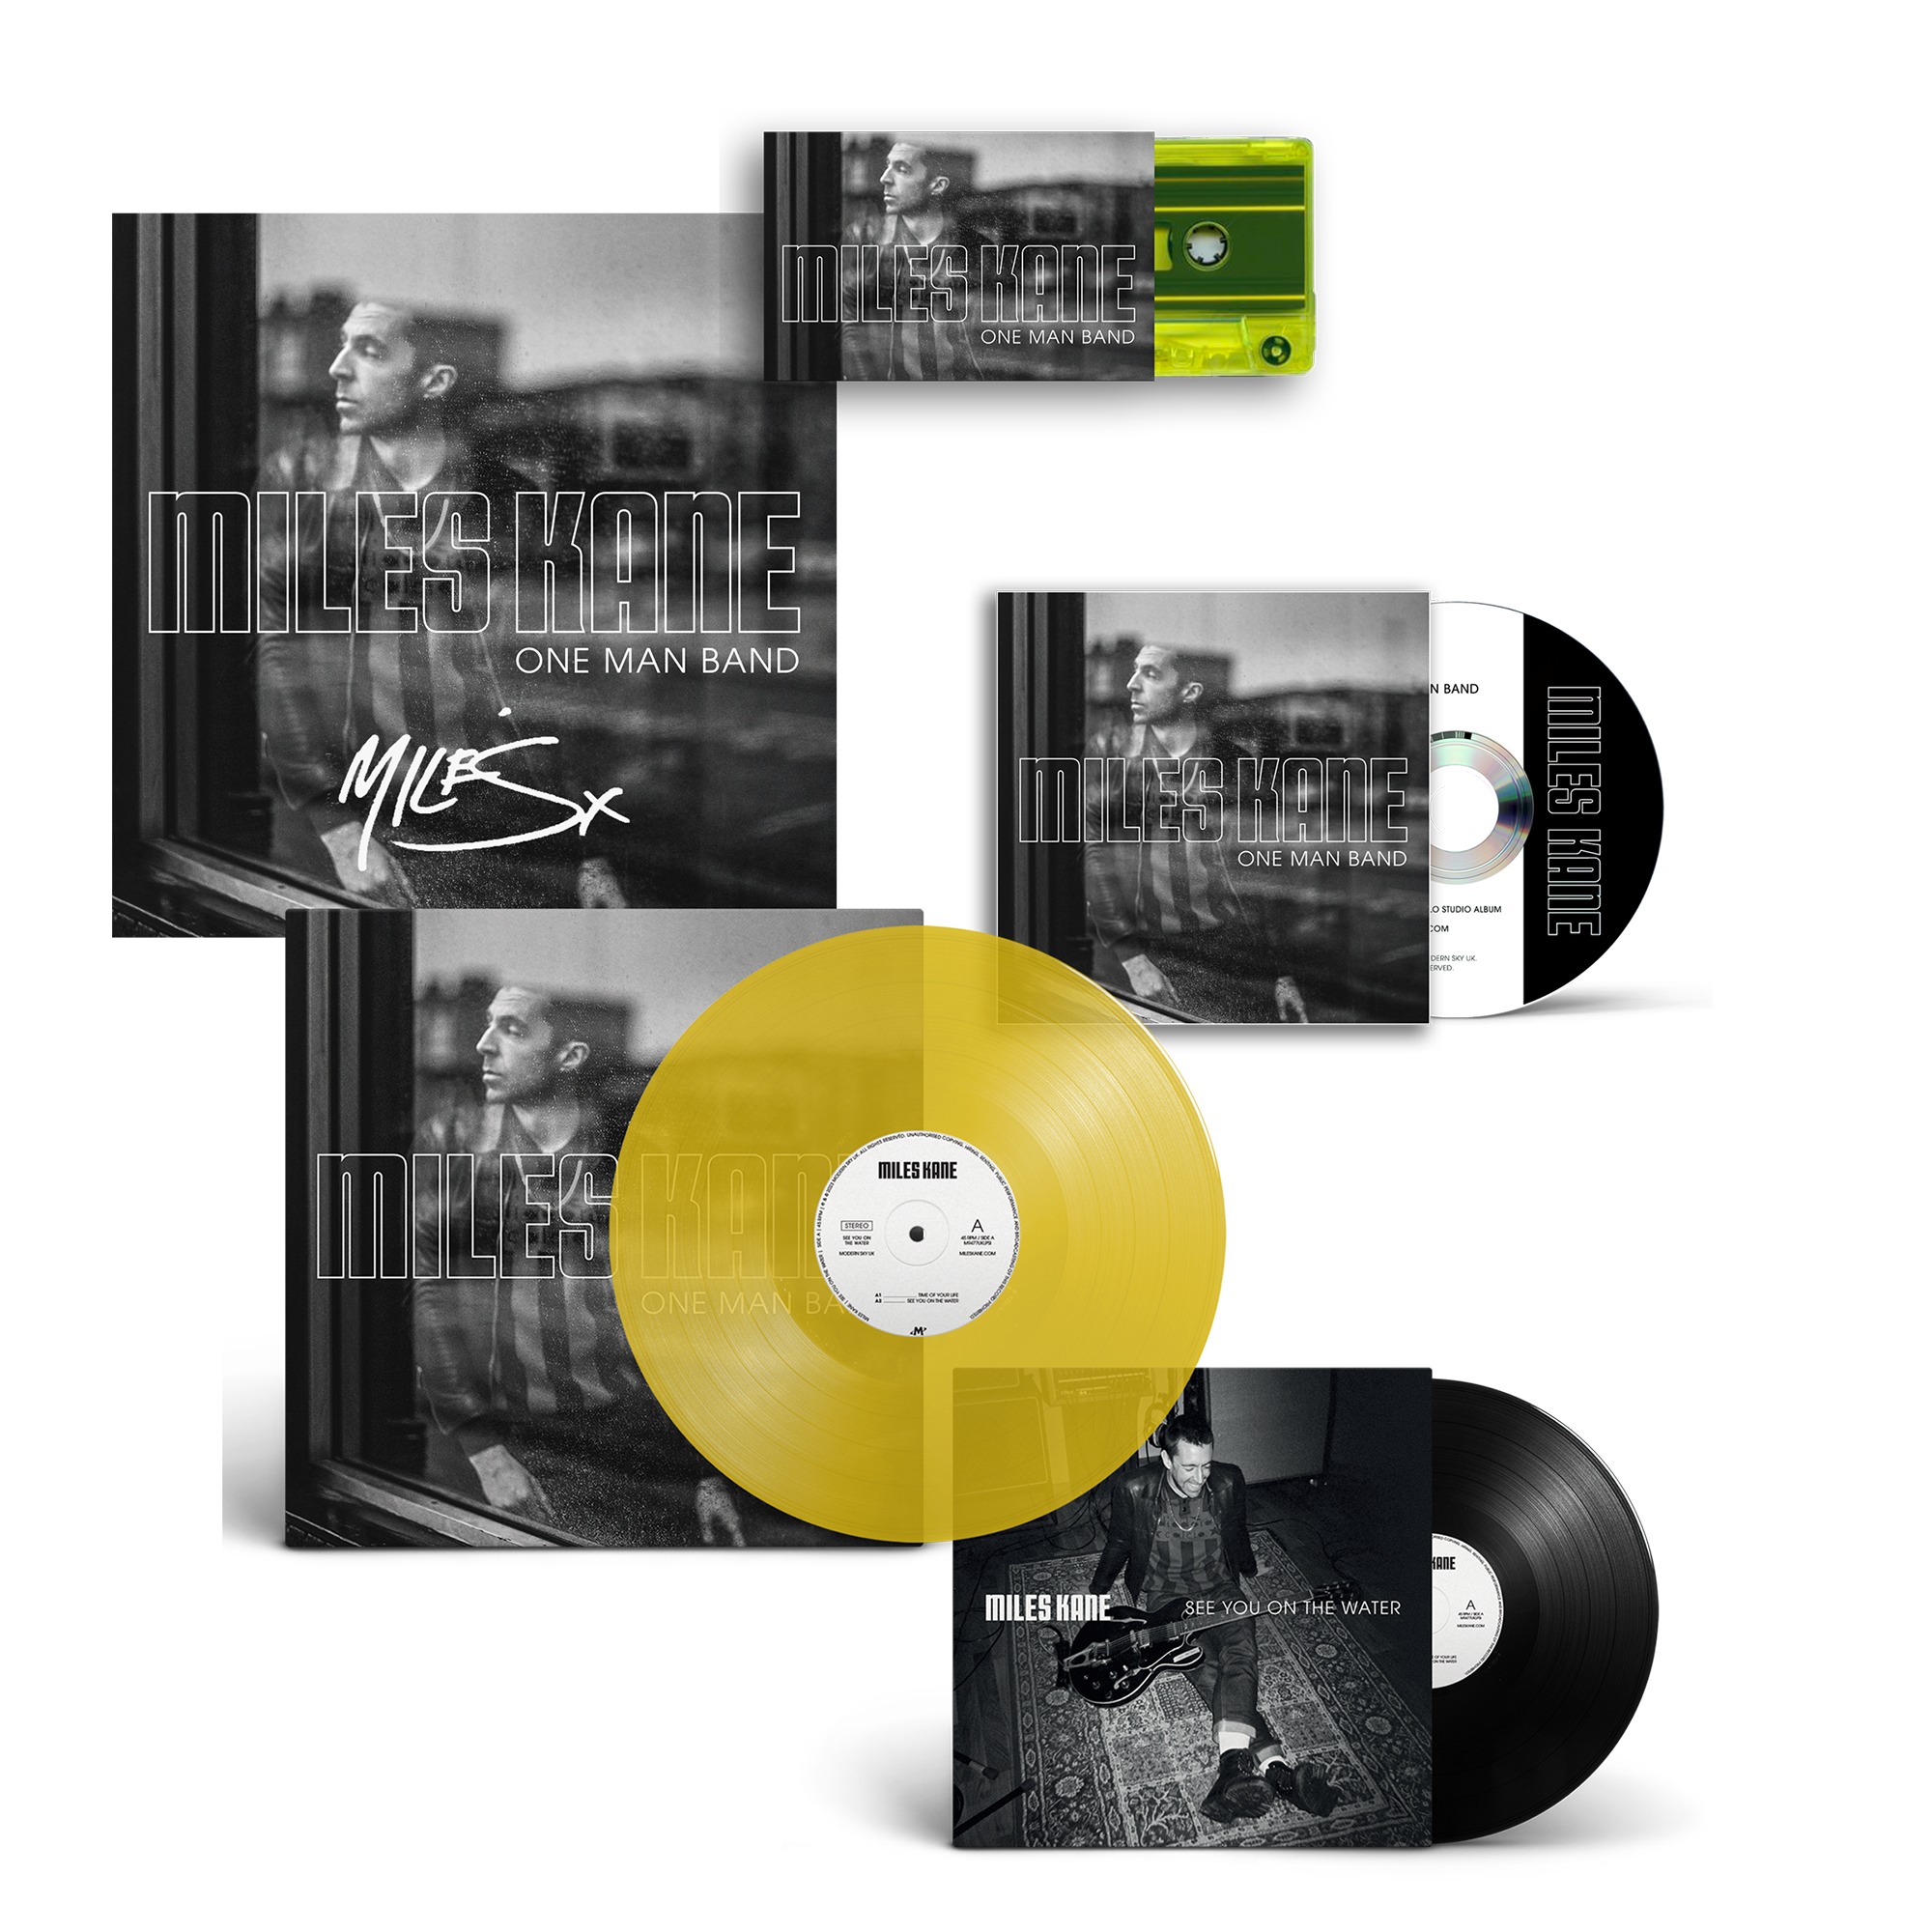 Transparent Yellow LP + 7 inch (EXCLUSIVE BONUS TRACKS) + Standard CD + Cassette (Yellow/Black) + Signed Print